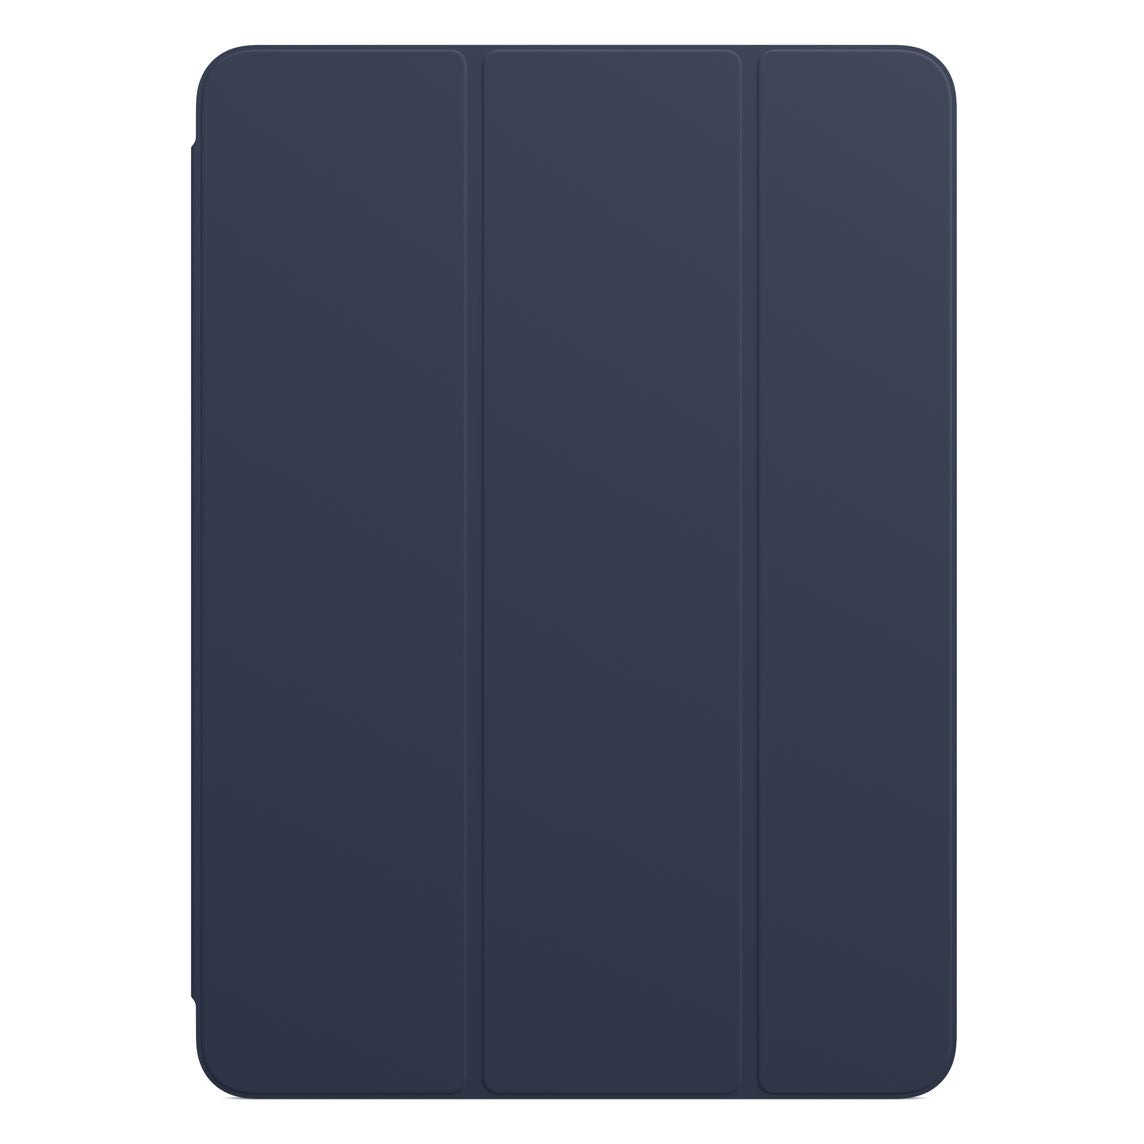 Smart Folio for iPad Pro (12.9-inch)